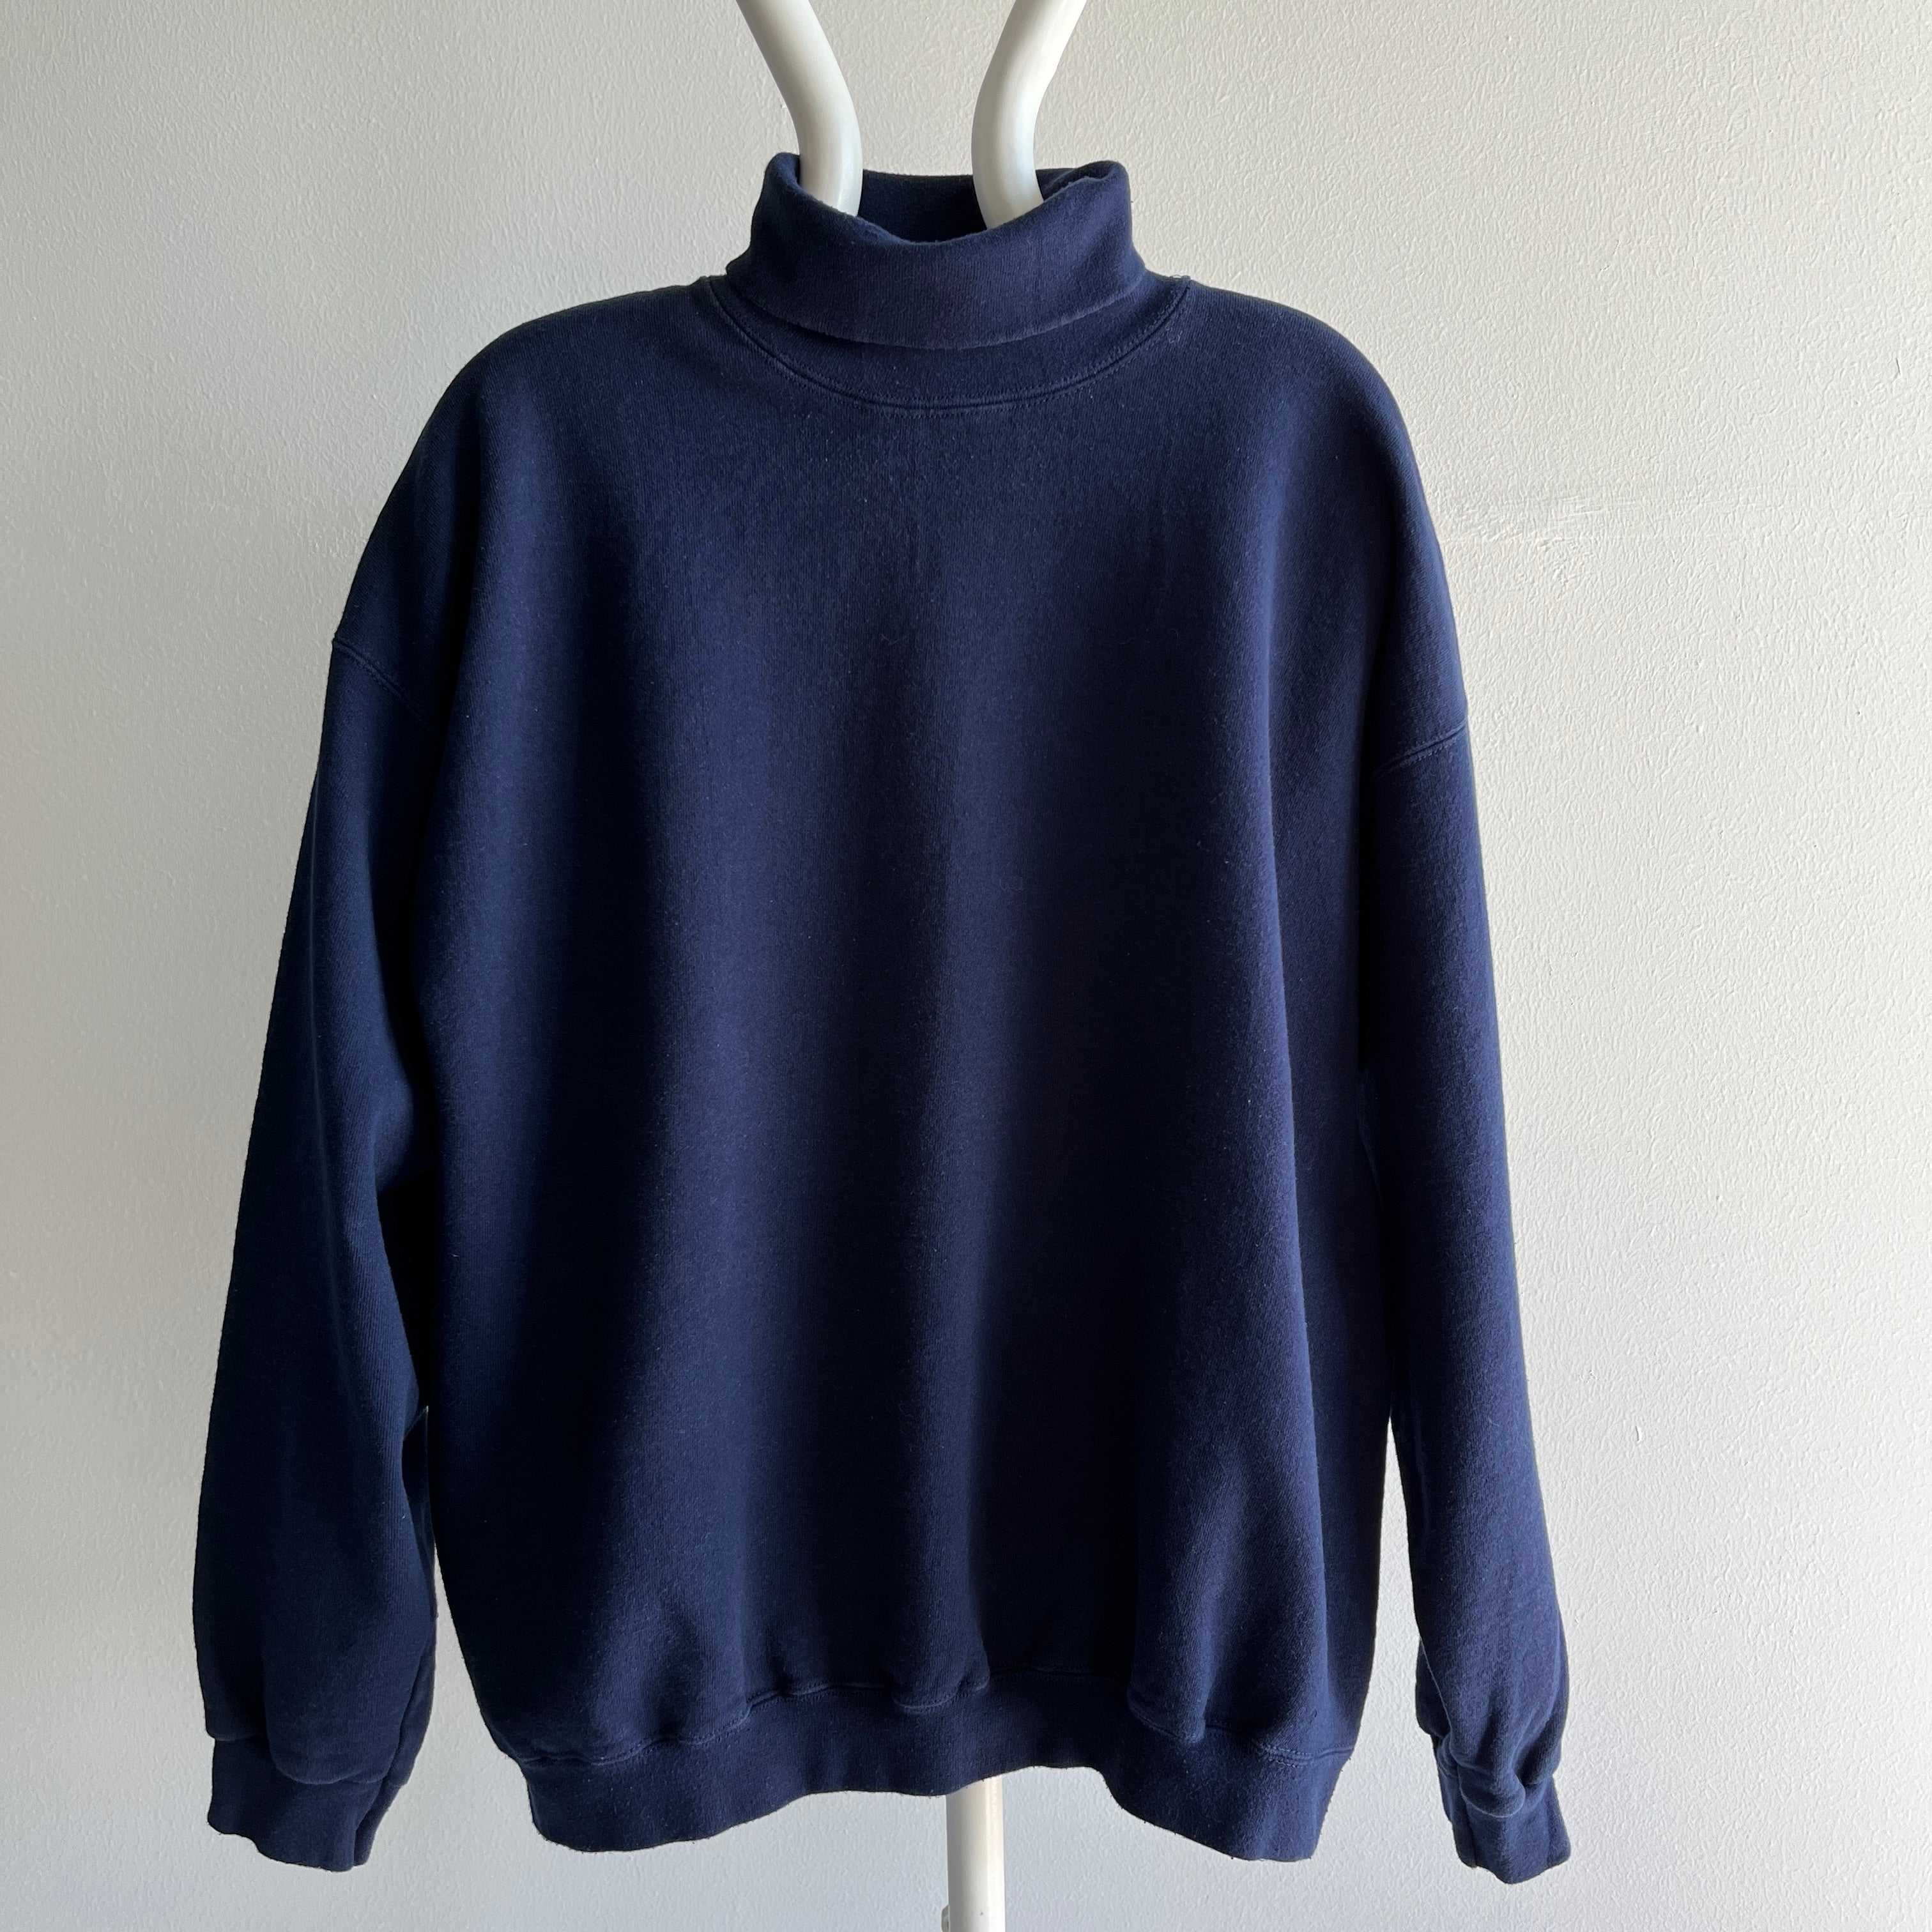 1990s Heavyweight Navy Turtleneck Sweatshirt by Tultex